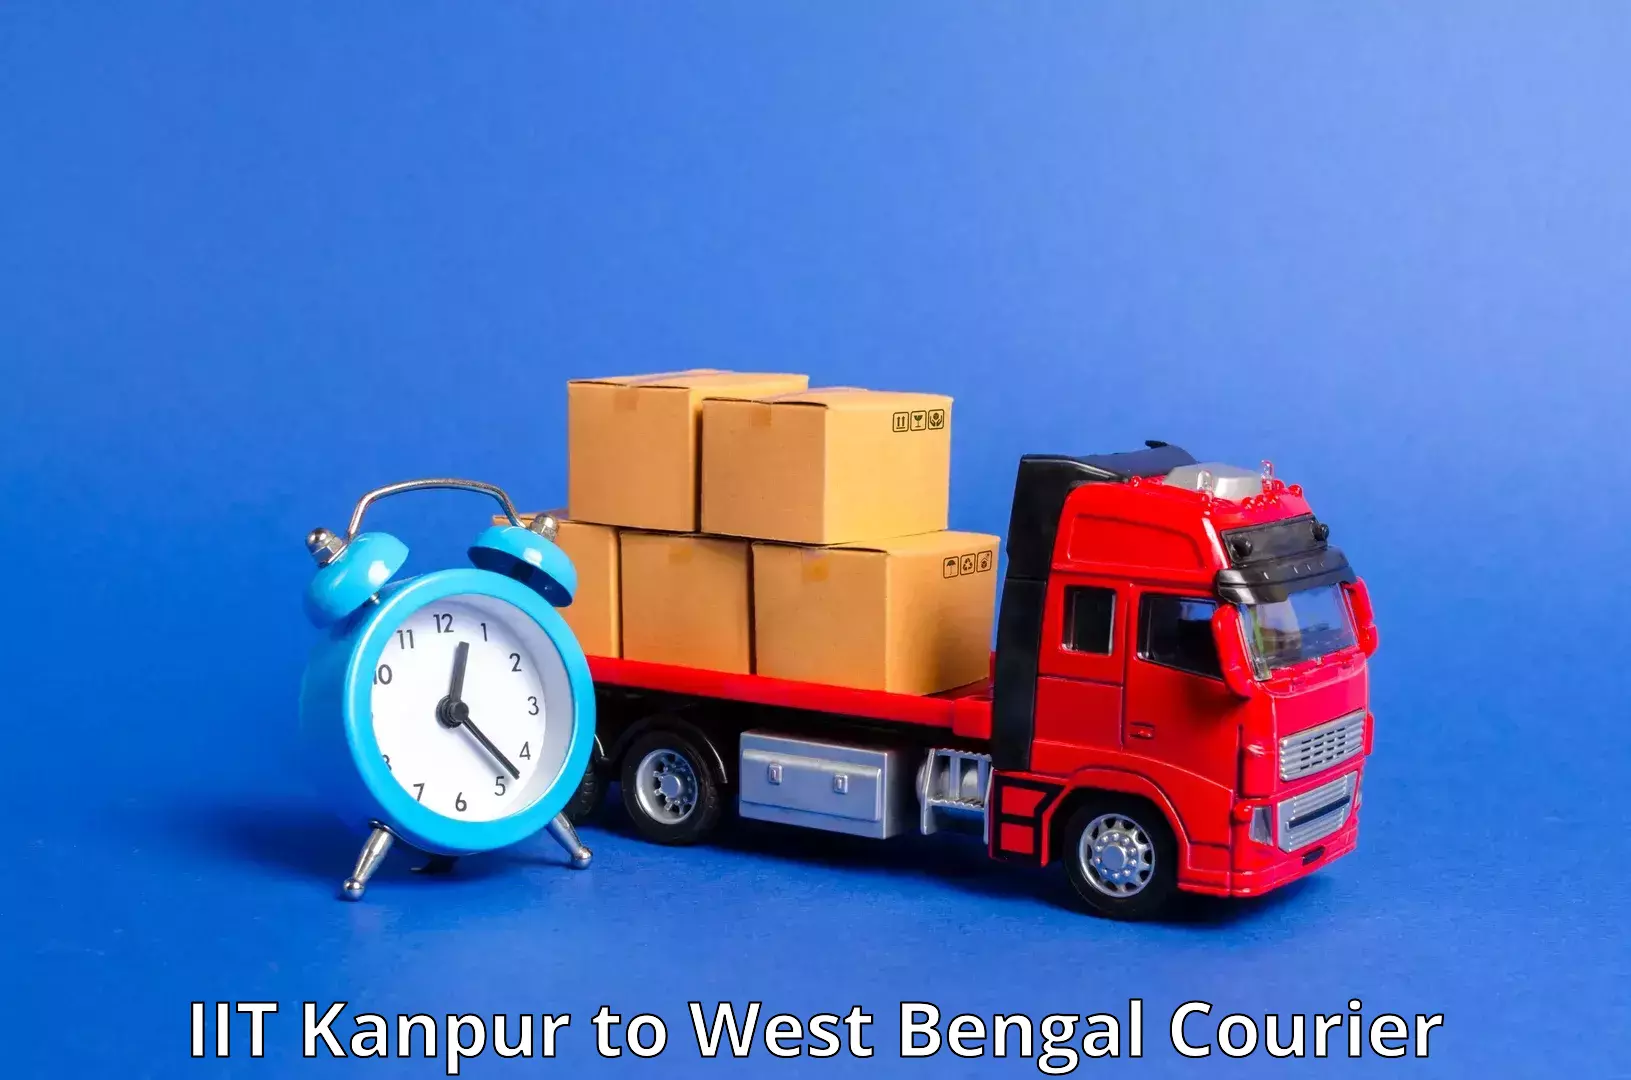 Doorstep delivery service IIT Kanpur to West Bengal